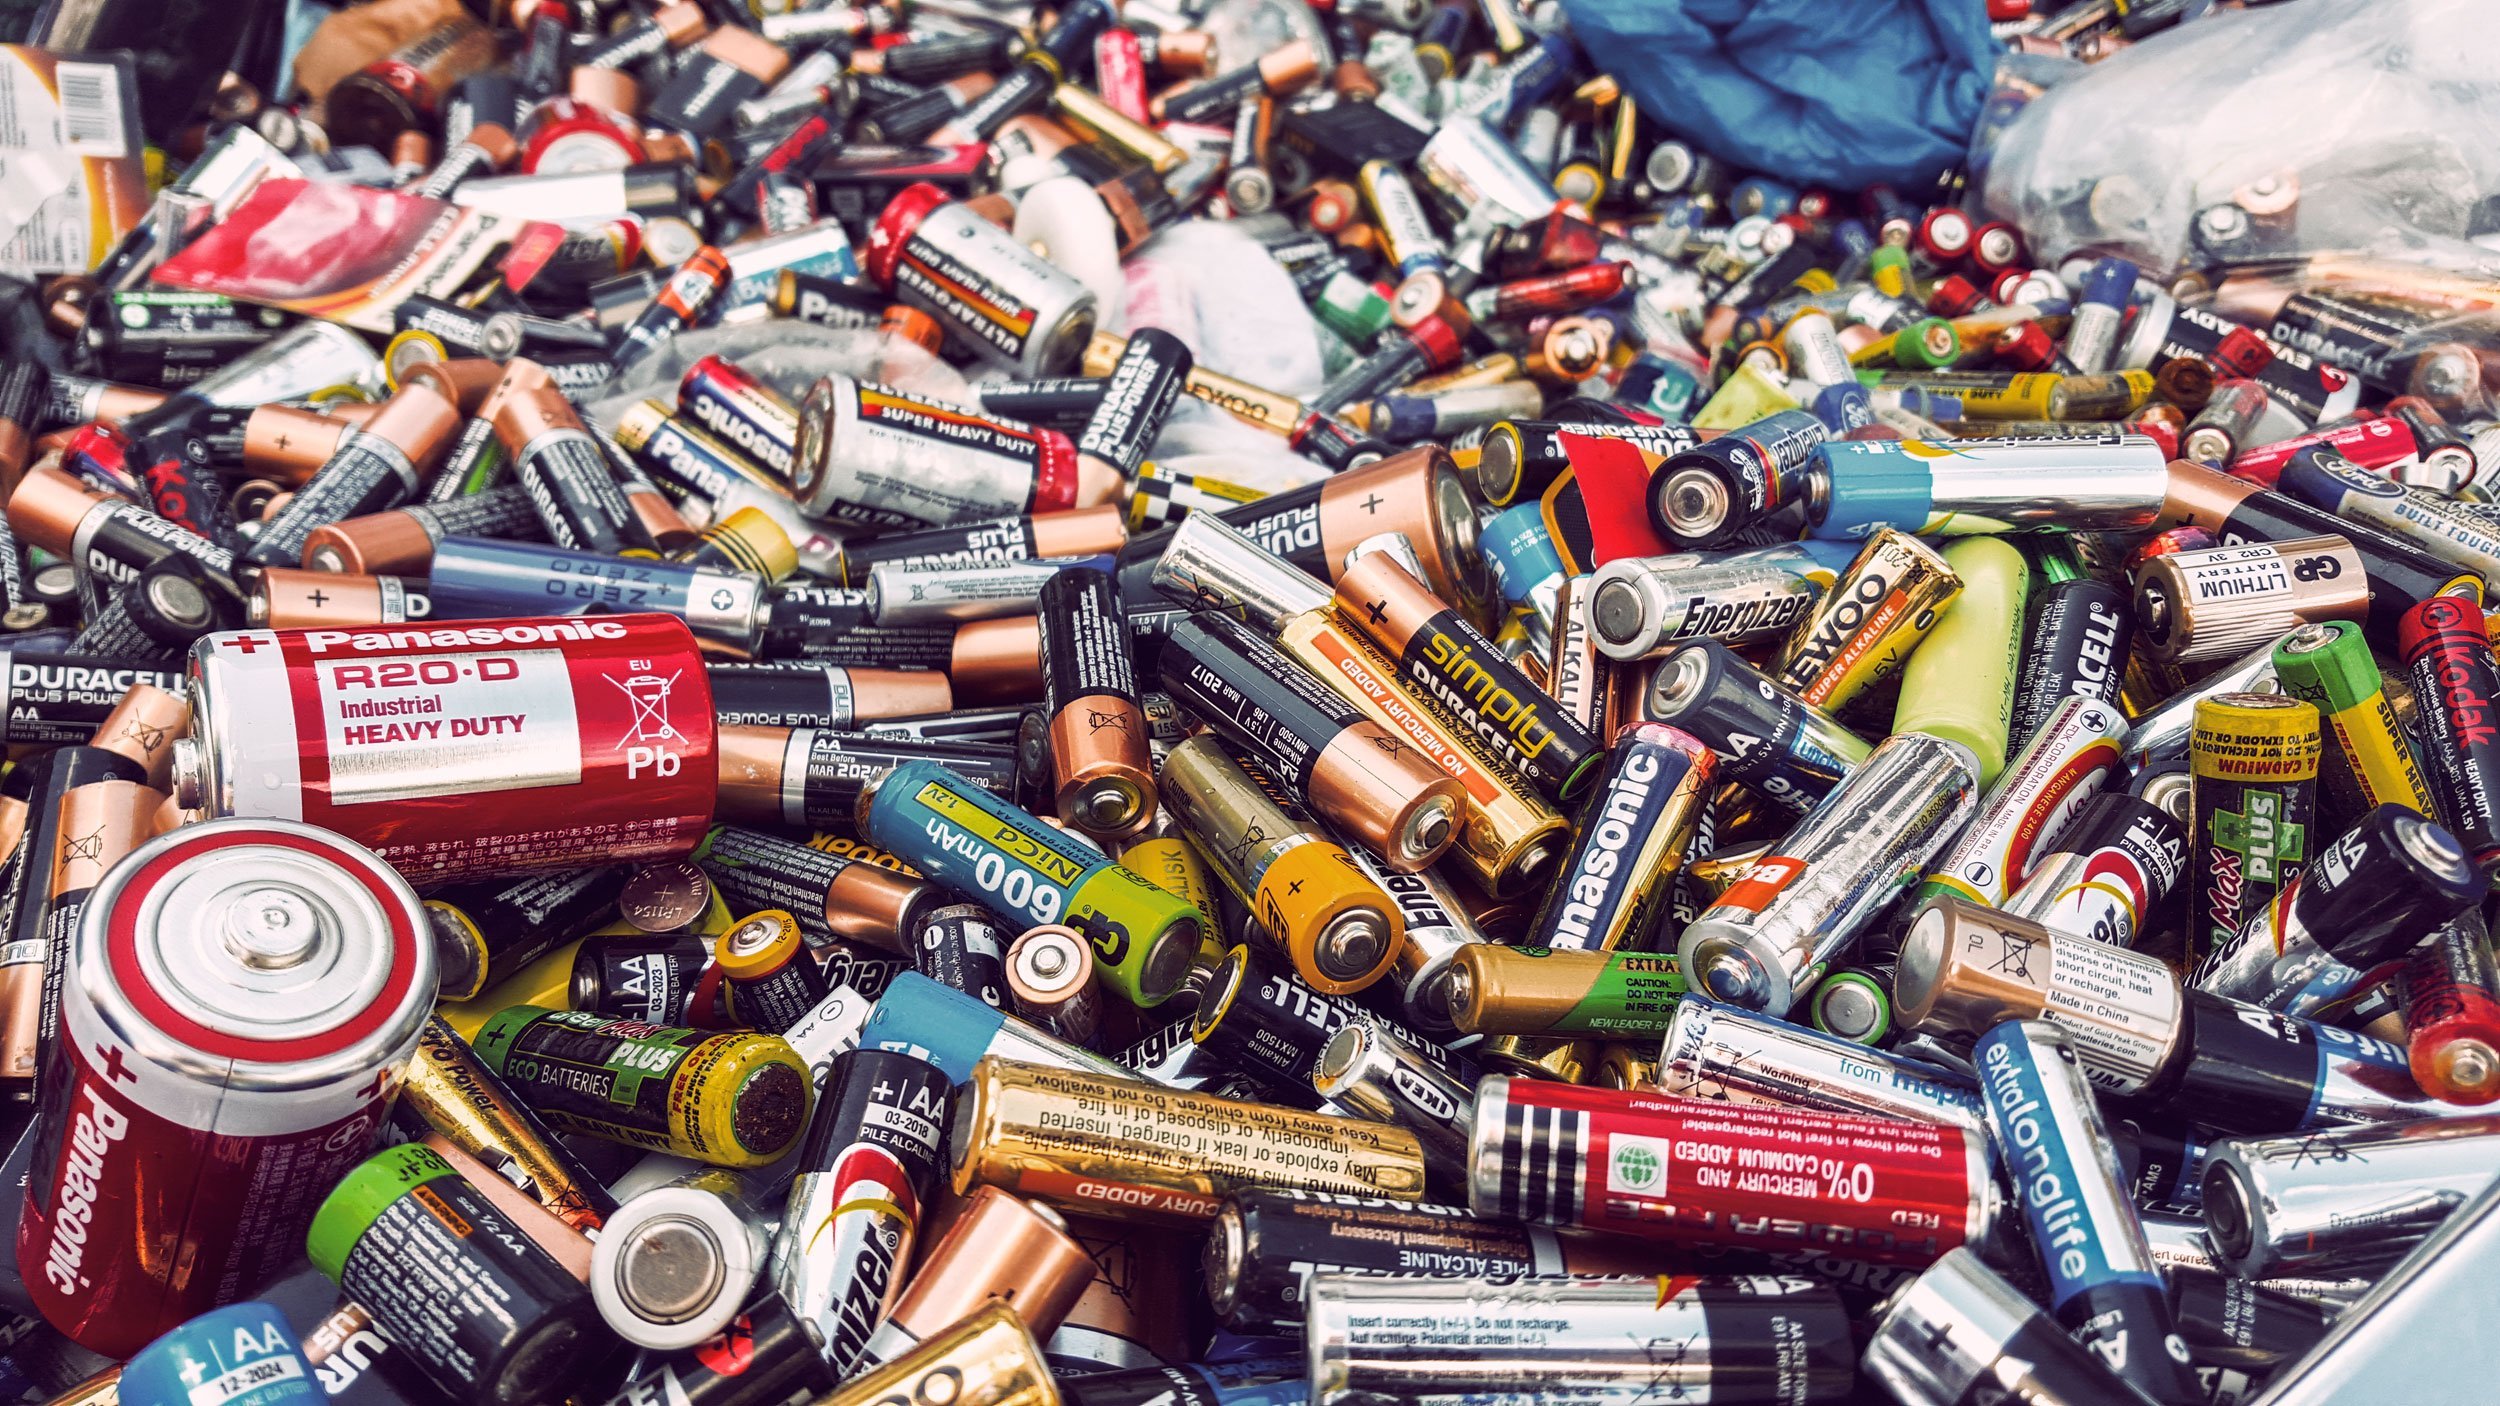 Recycle batteries. Батарейки. Много батареек. Батарейки отходы. Разнообразие батареек.